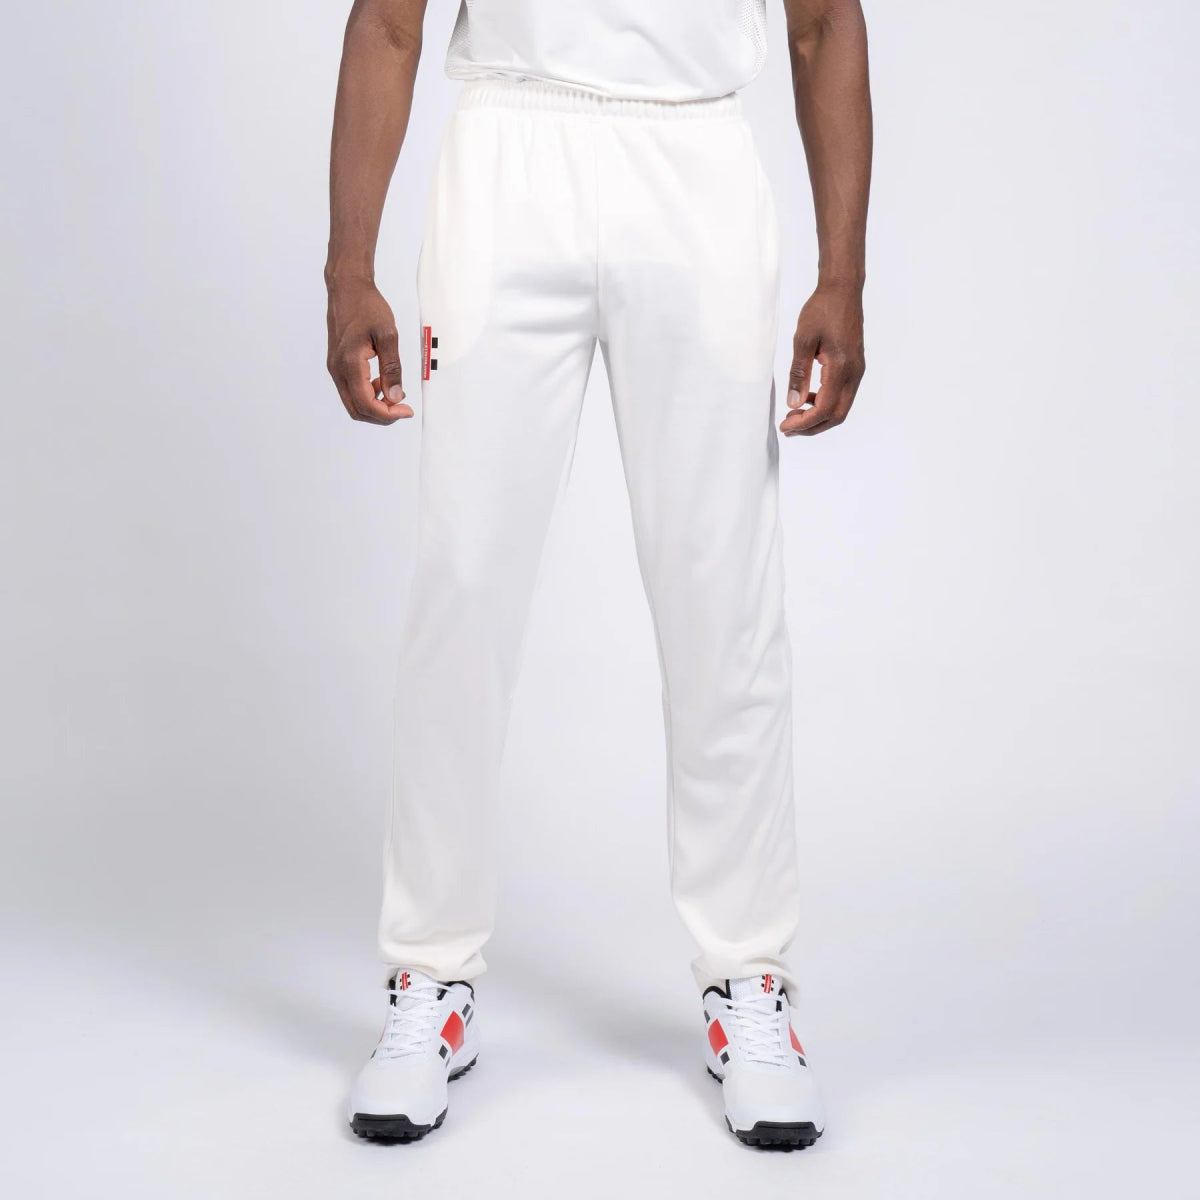 Gray Nicolls Pro Performance Cricket Trouser - White - Acrux Sports